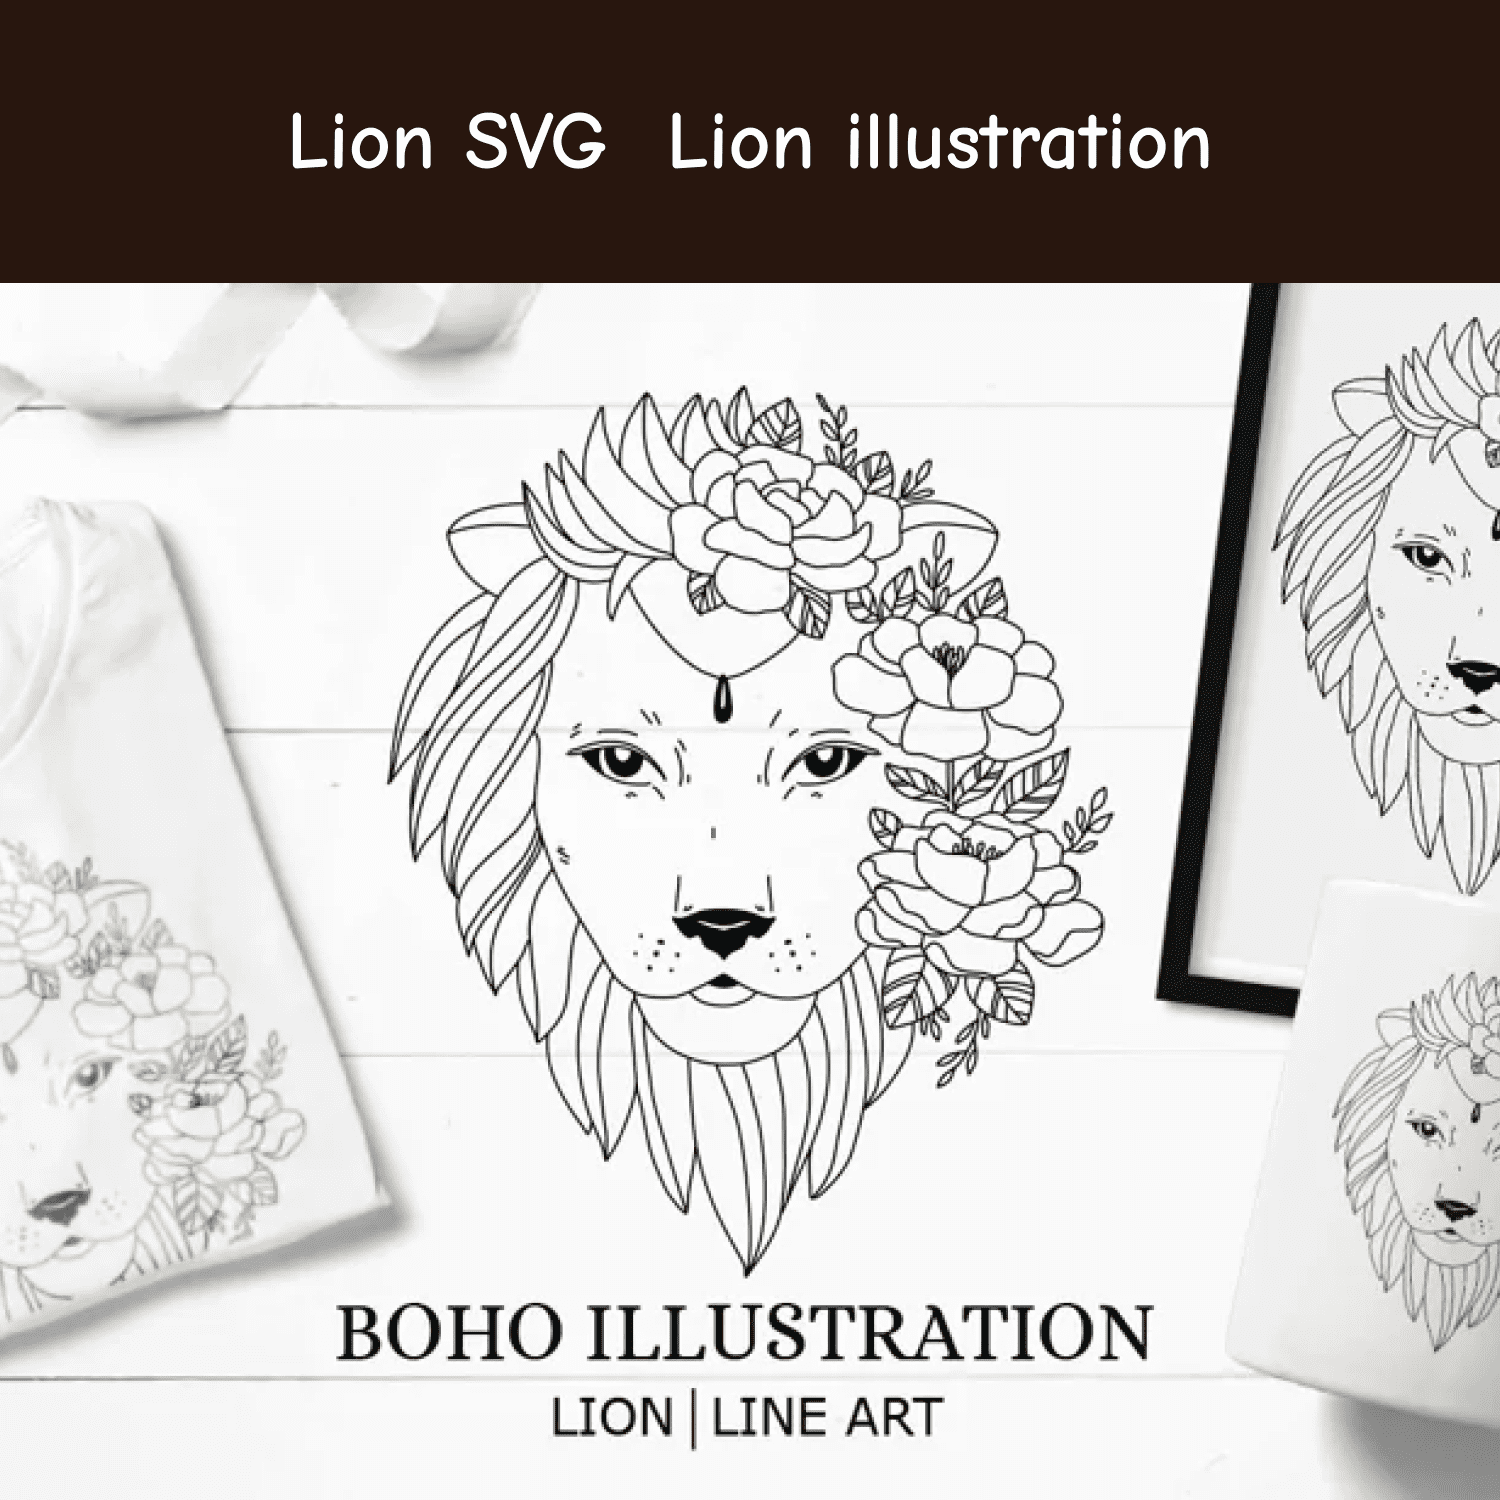 Lion SVG / Lion illustration main cover.